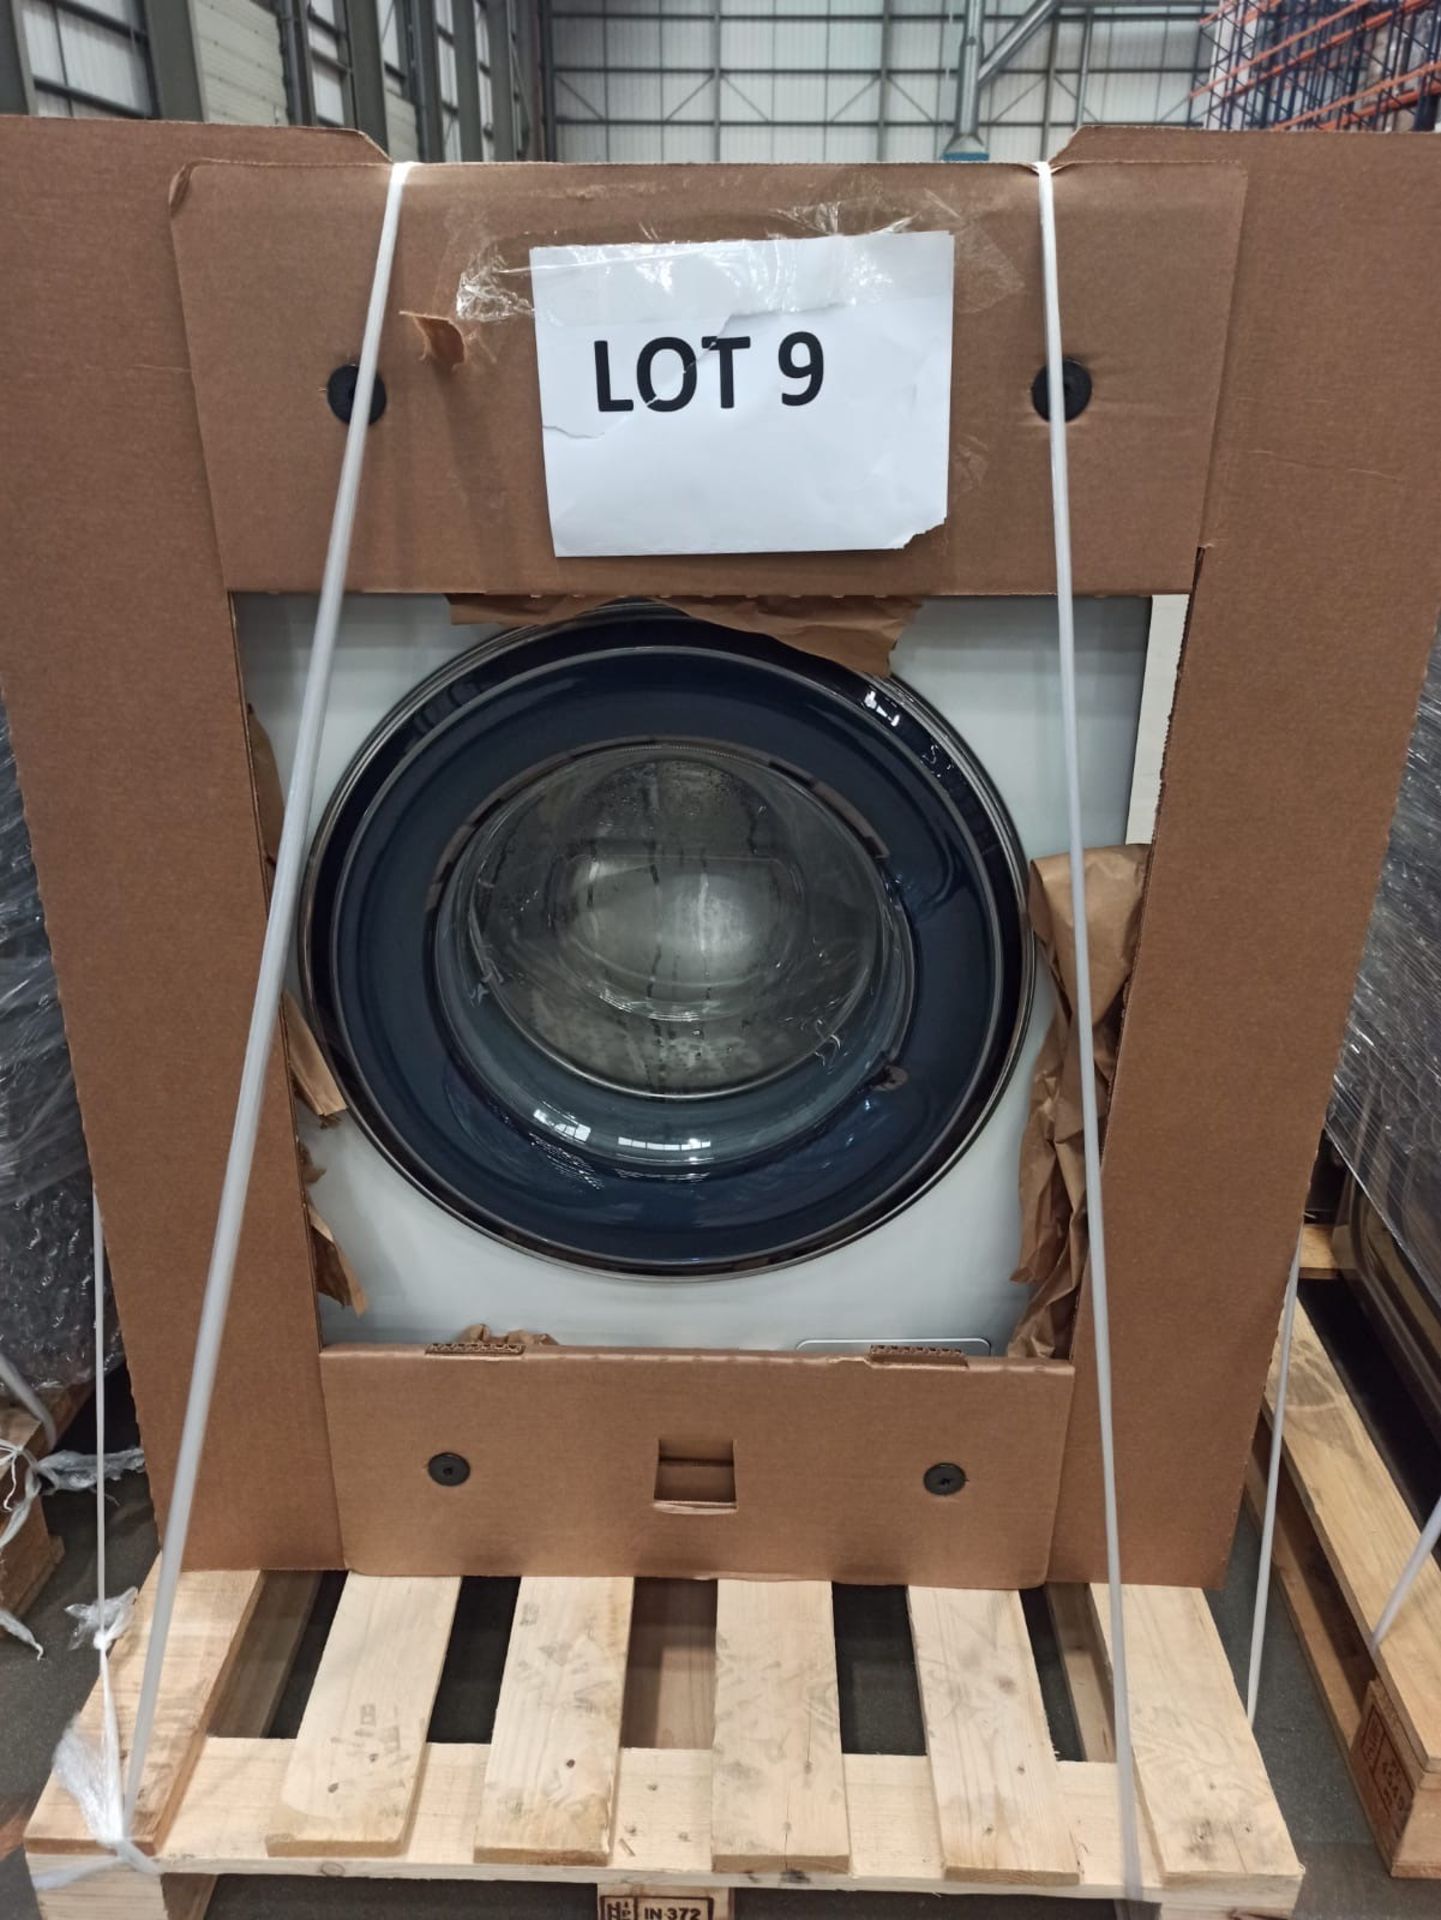 Pallet of 1 Samsung Premium Washing machine. Latest selling price £339* - Image 4 of 8